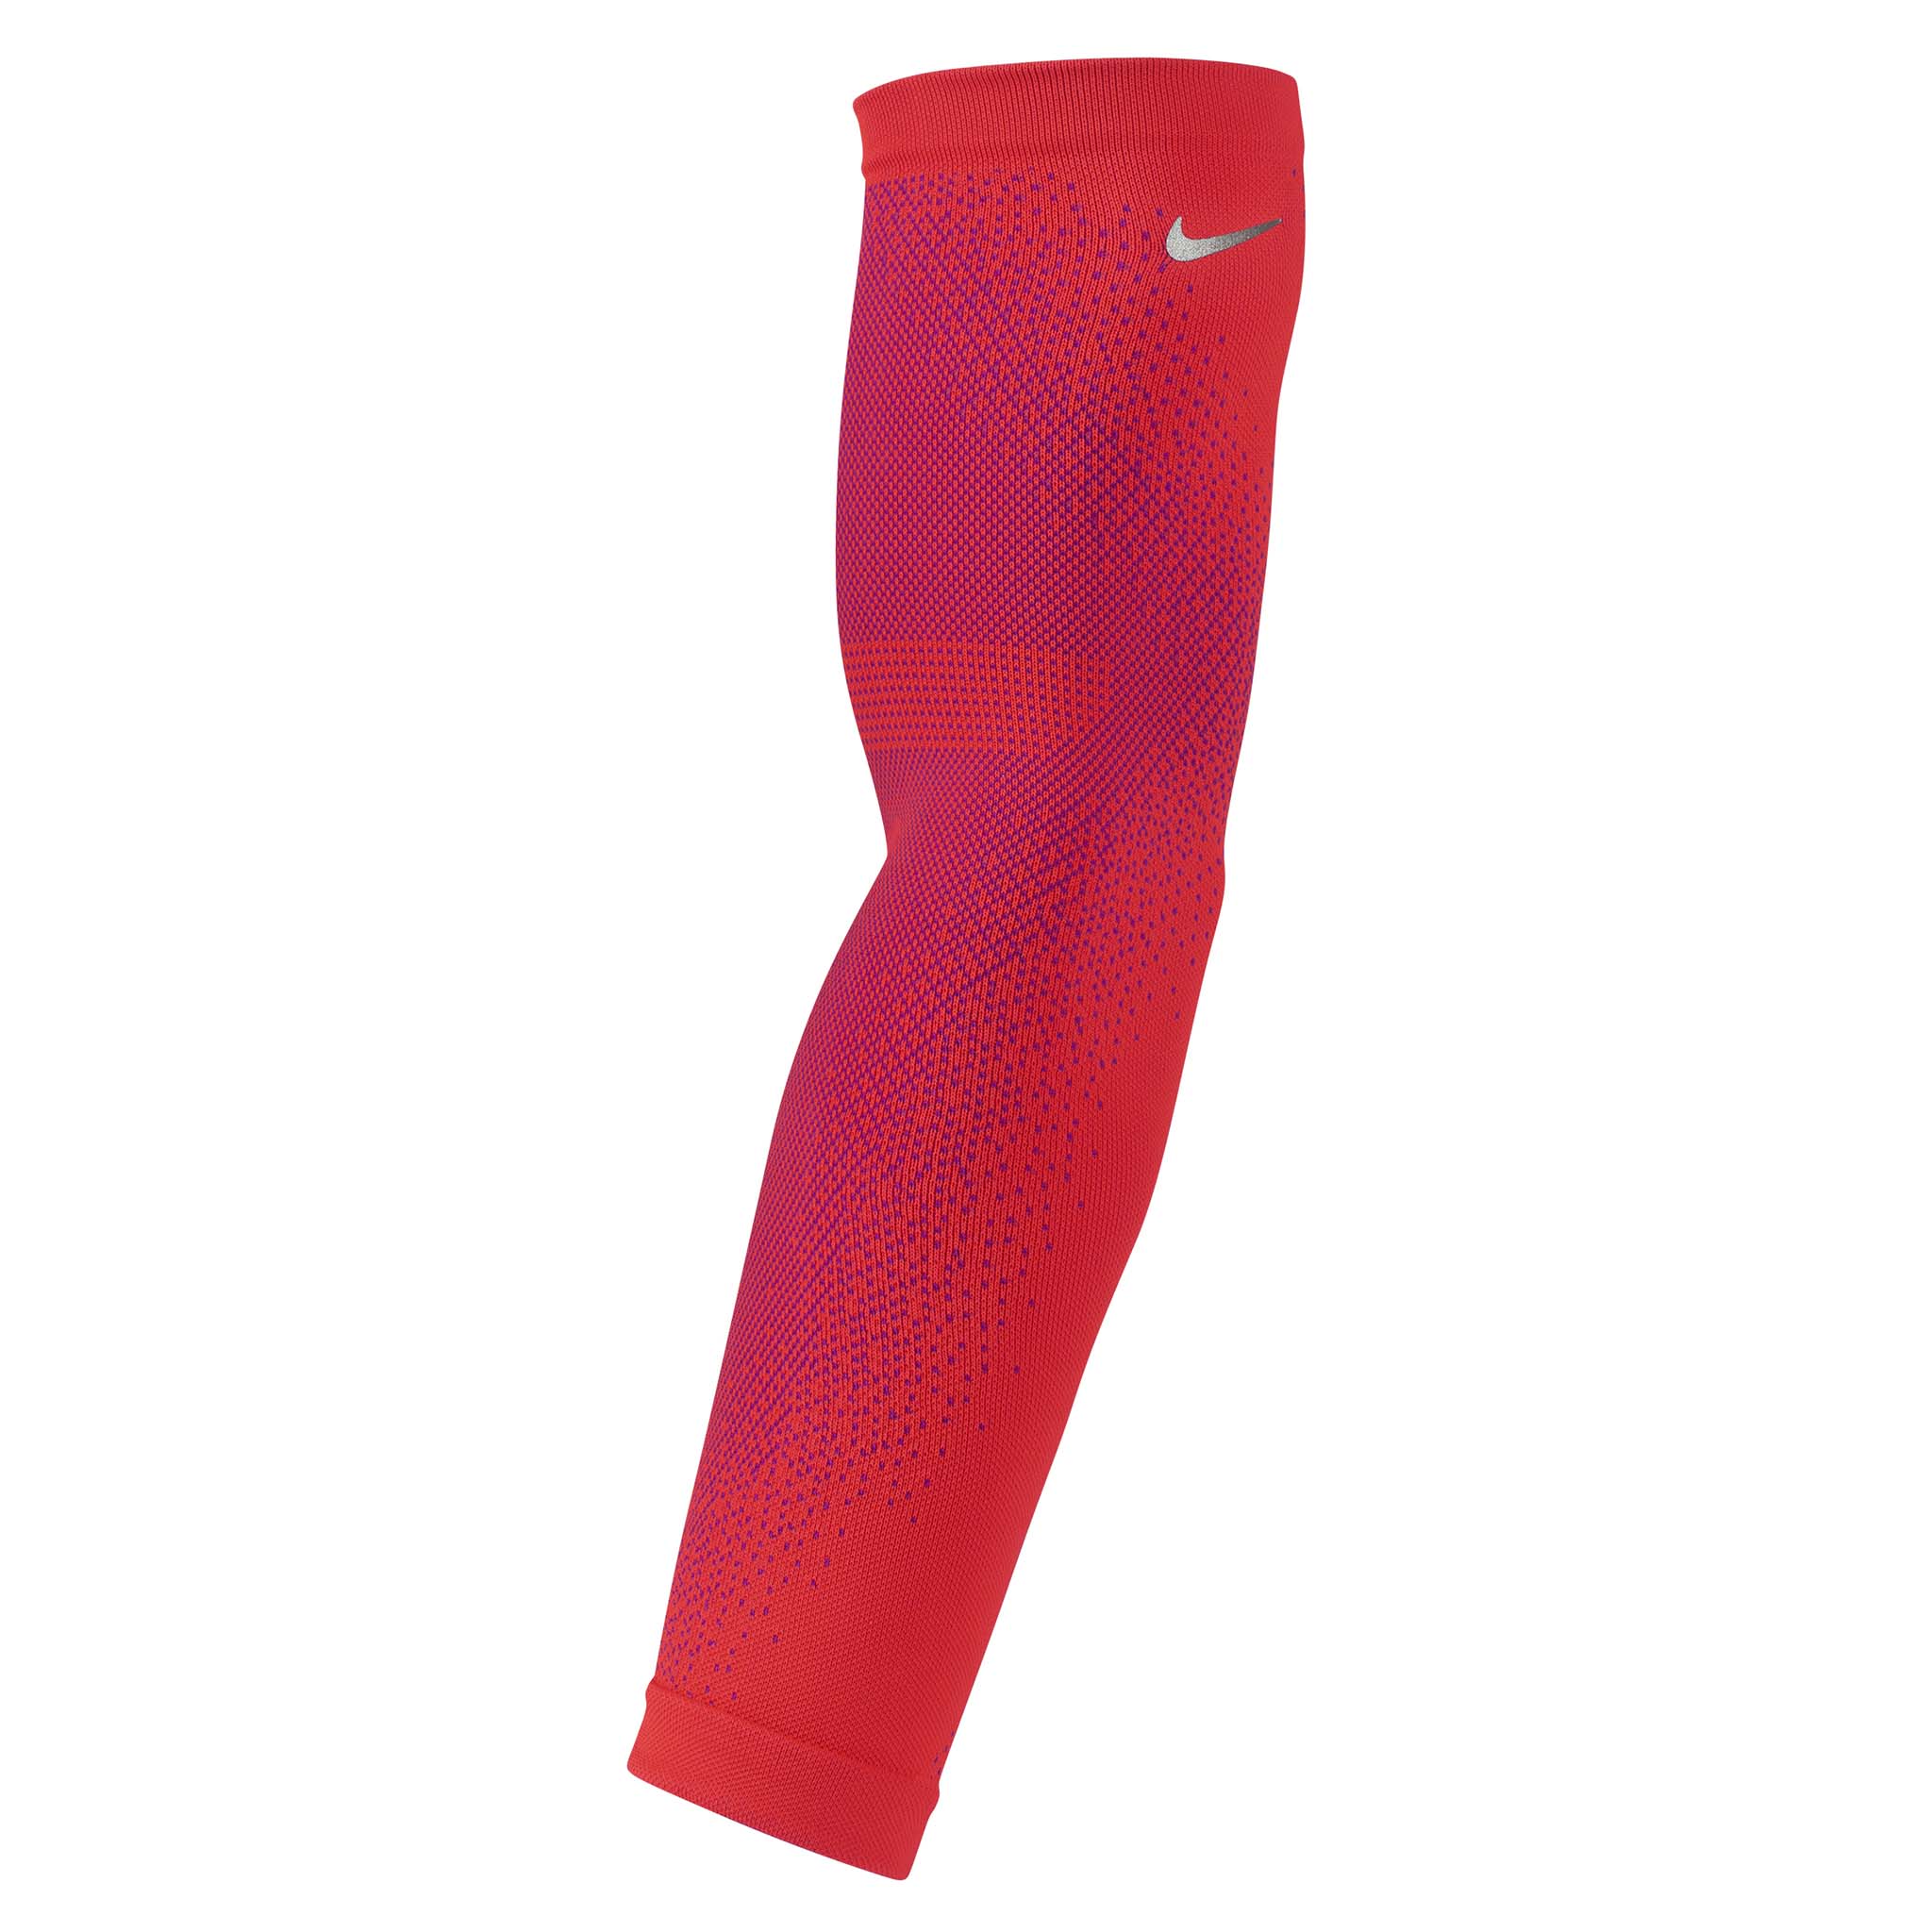 Nike Breaking 2 Sleeves Unisex Running Arm Sleeves – Soccer Sport Fitness